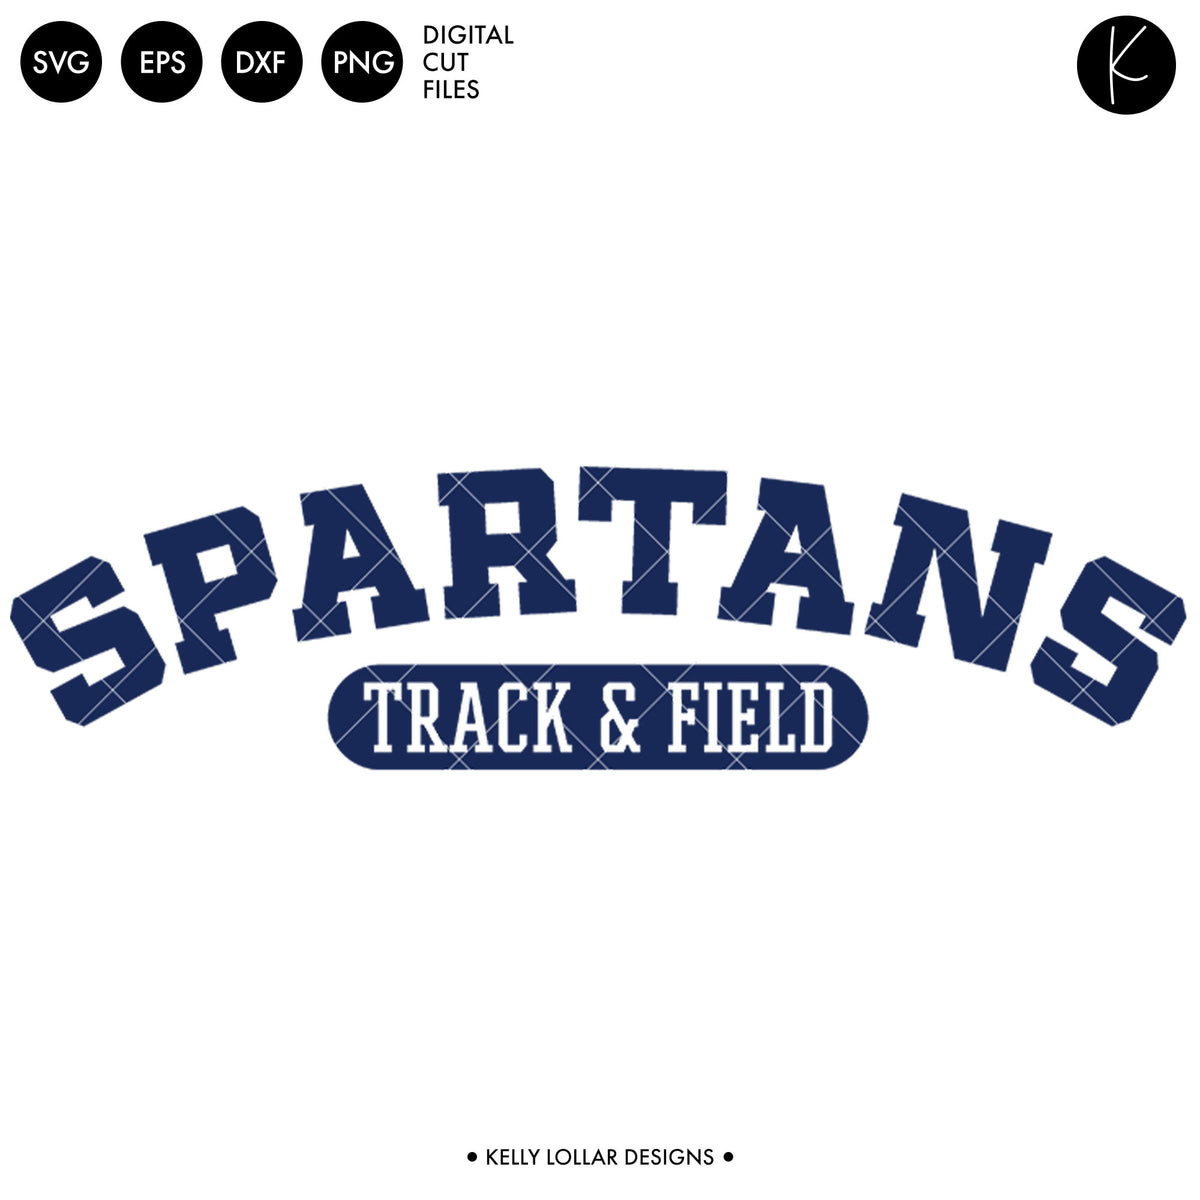 Spartans Track &amp; Field Bundle | SVG DXF EPS PNG Cut Files